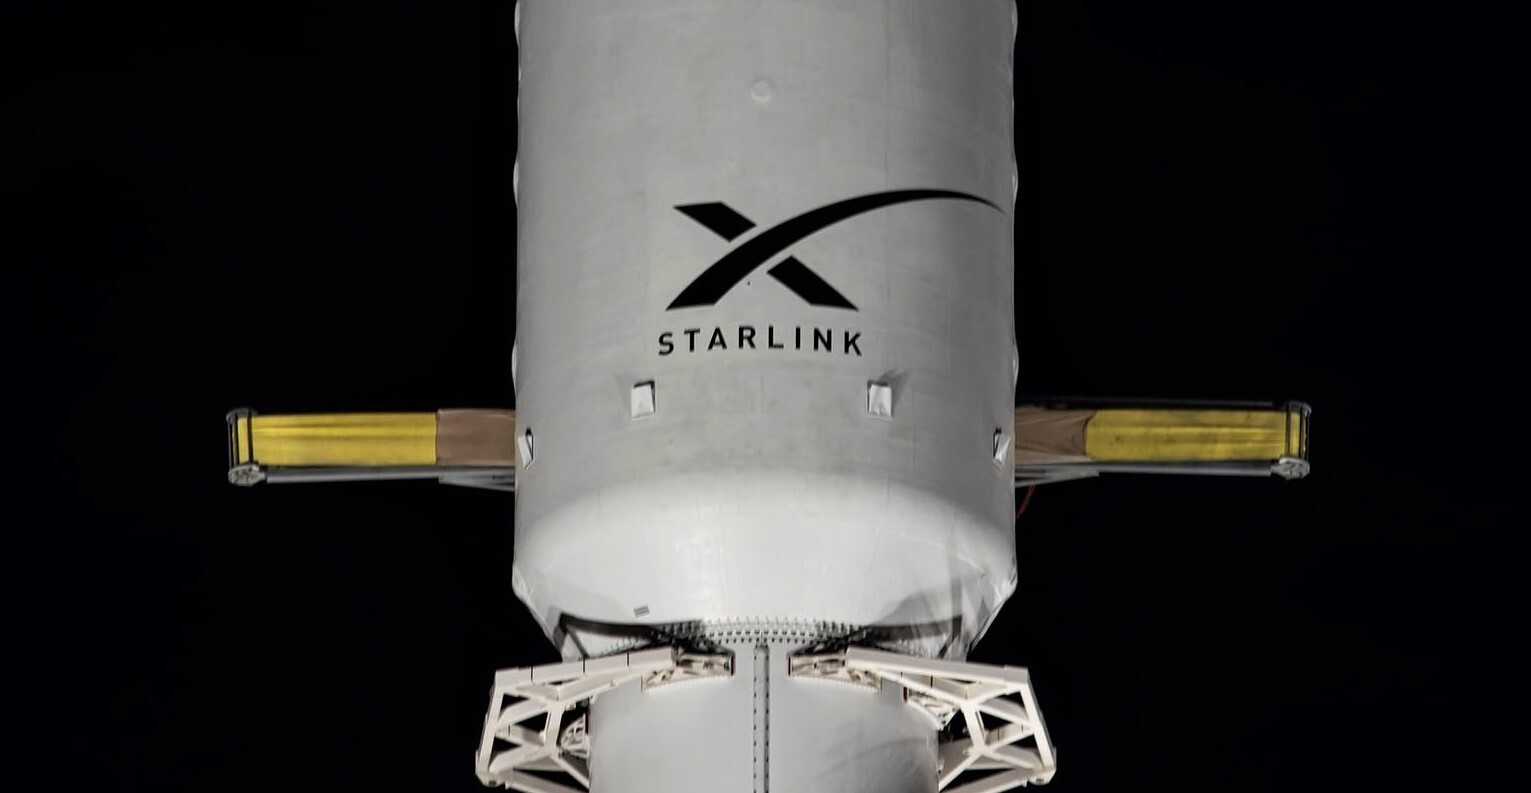 starlink-1-falcon-9-b1048-lc-40-vertical-111019-spacex-1-fairing-2